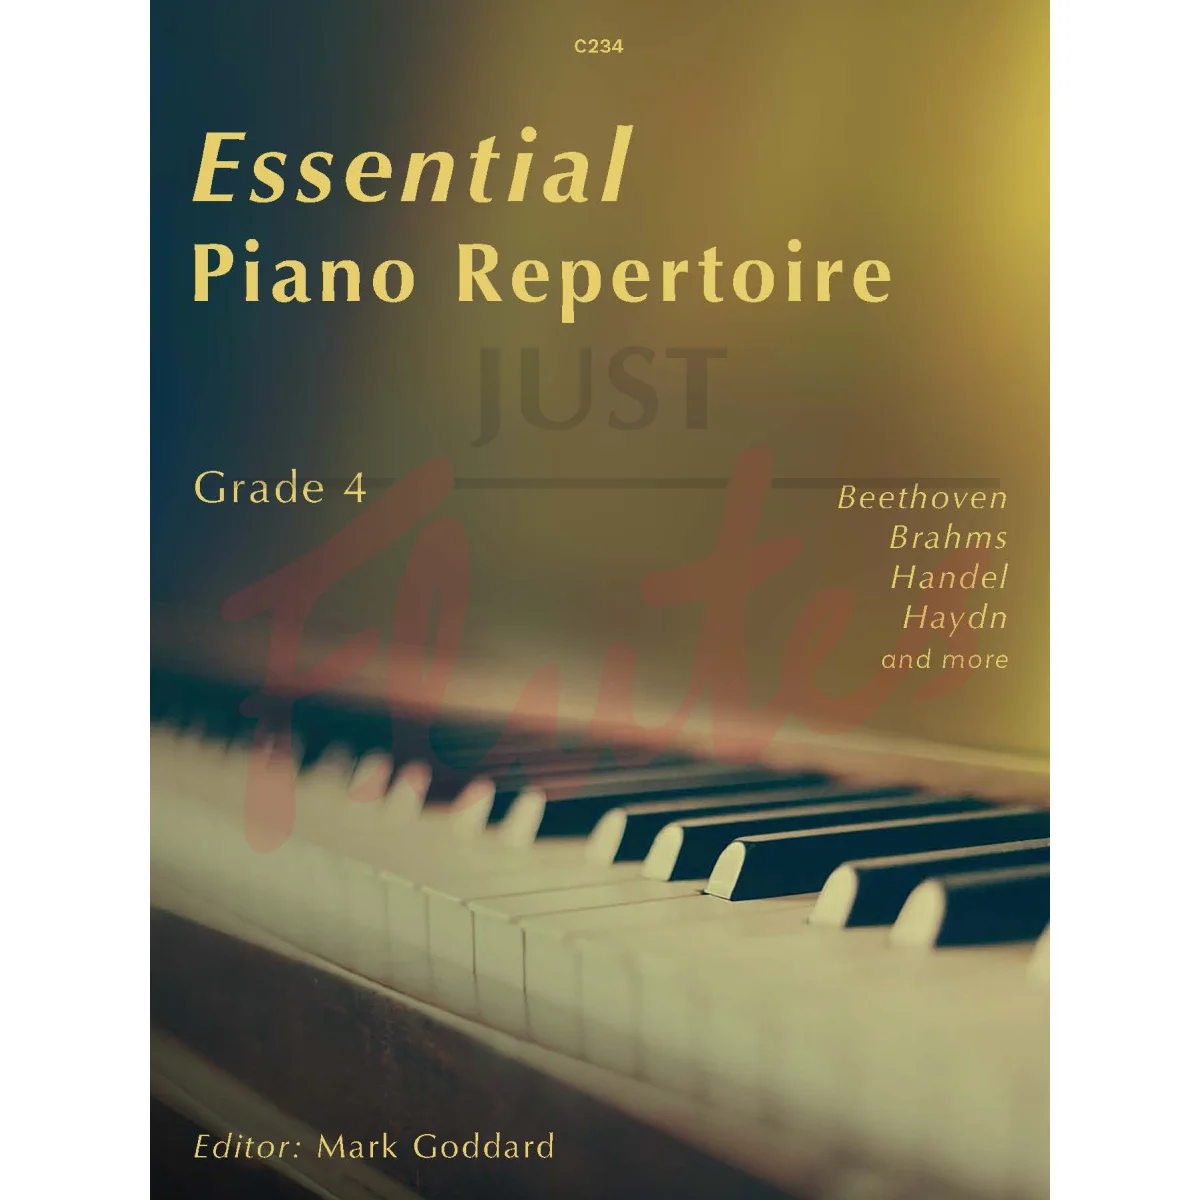 Essential Piano Repertoire: Grade 4